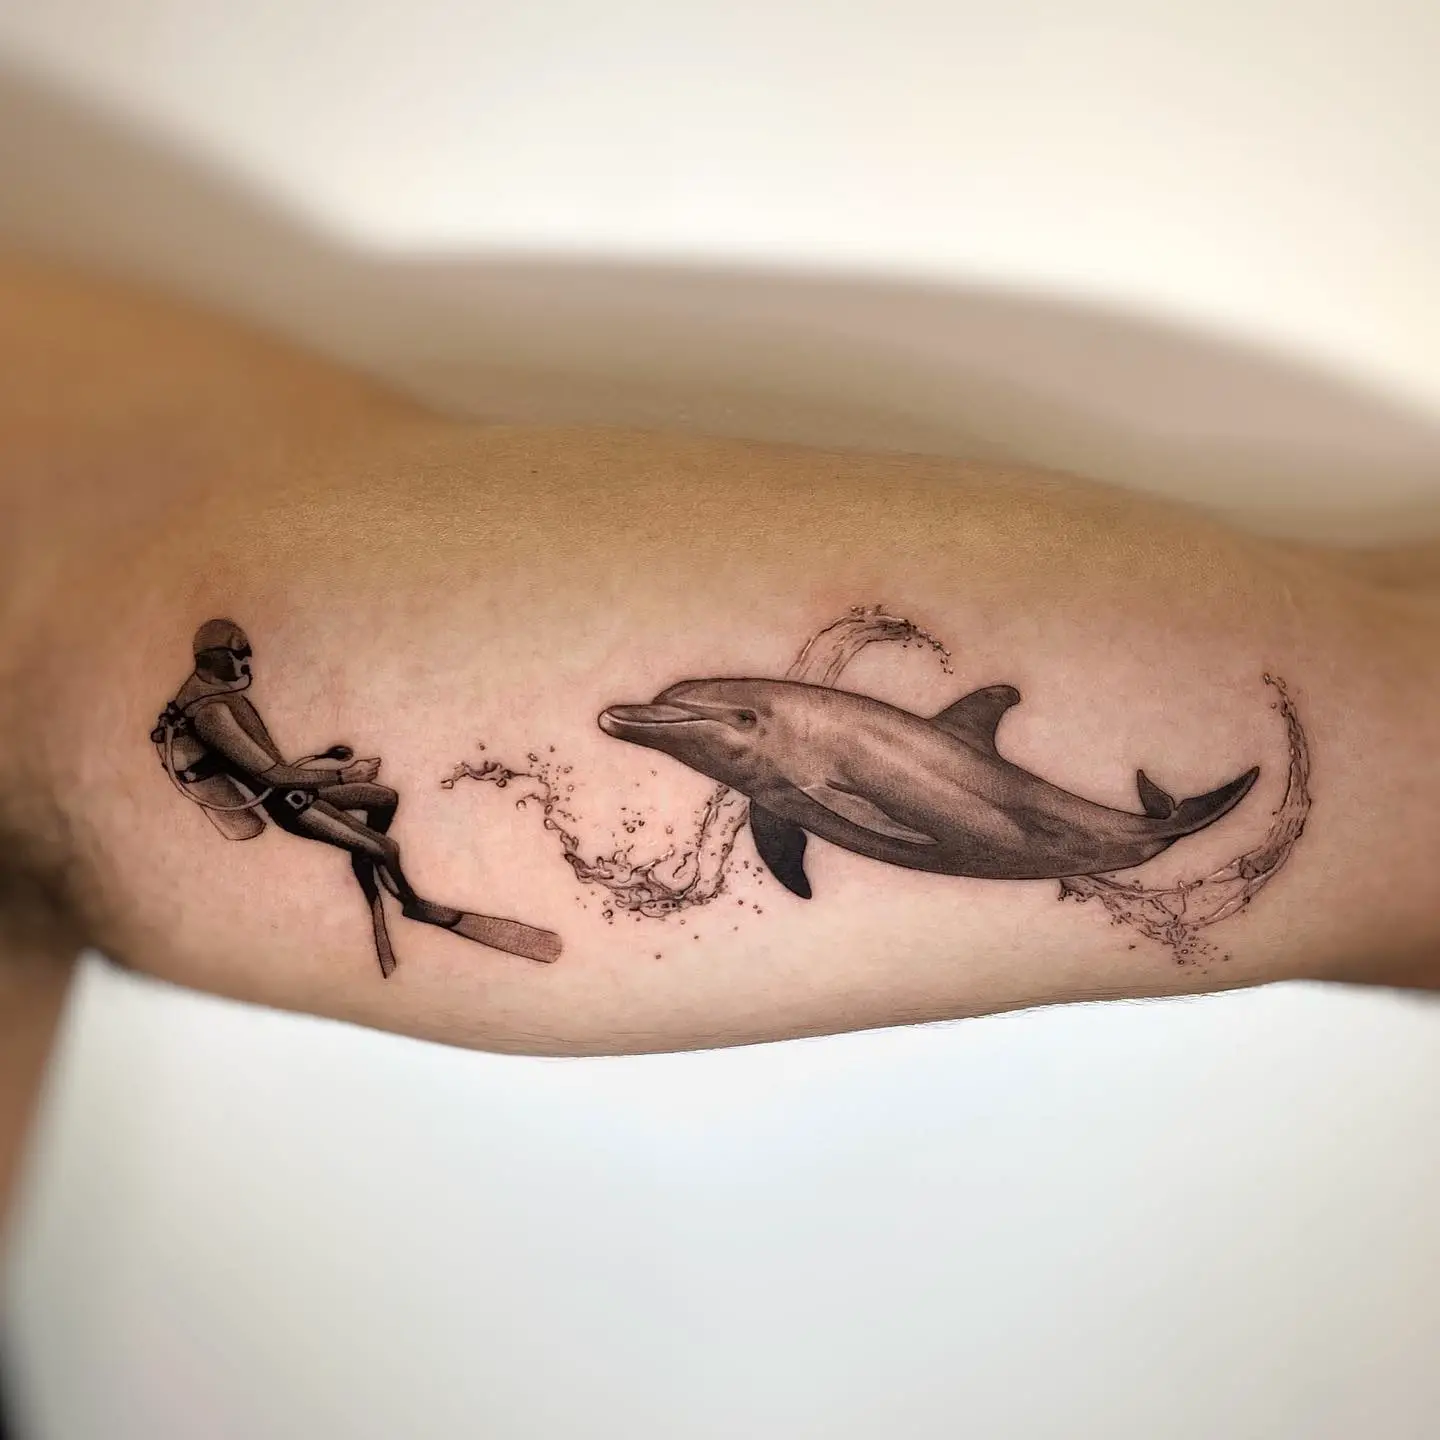 Black and gray dolphin tattoos by mogiz.tattoo